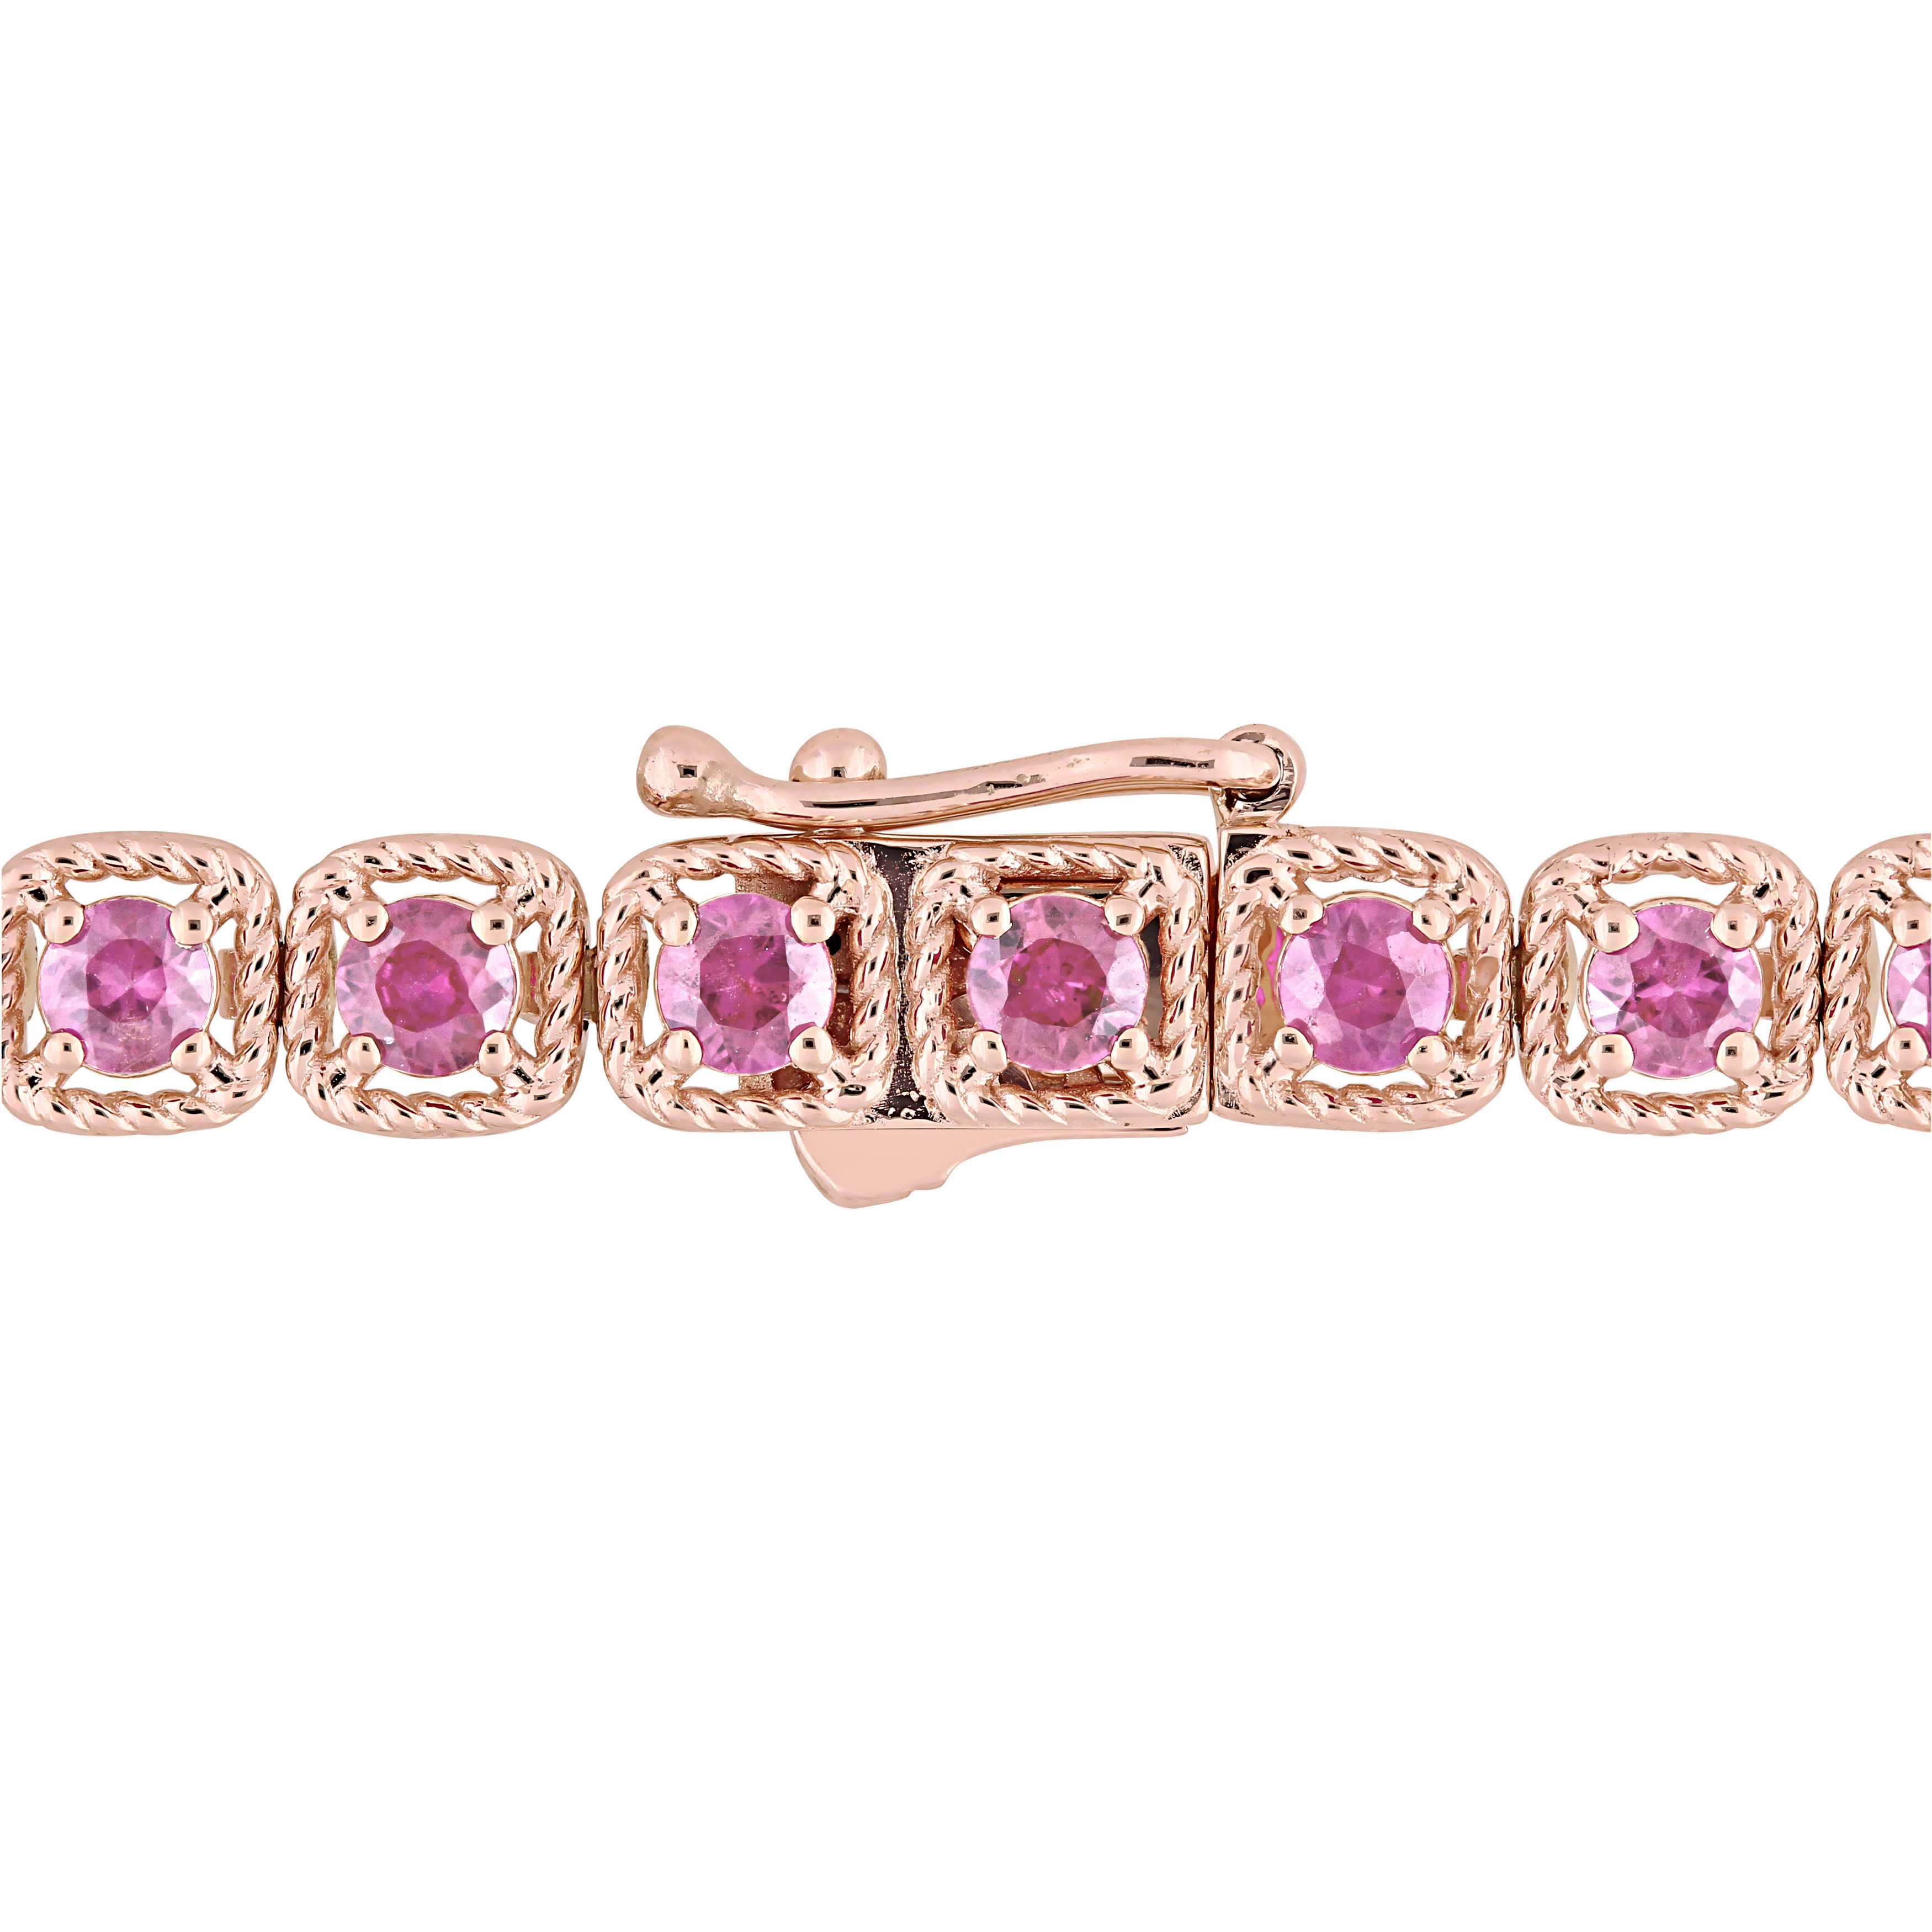 3 3/4 CT TGW Pink Sapphire Tennis Bracelet in 14K Rose Gold